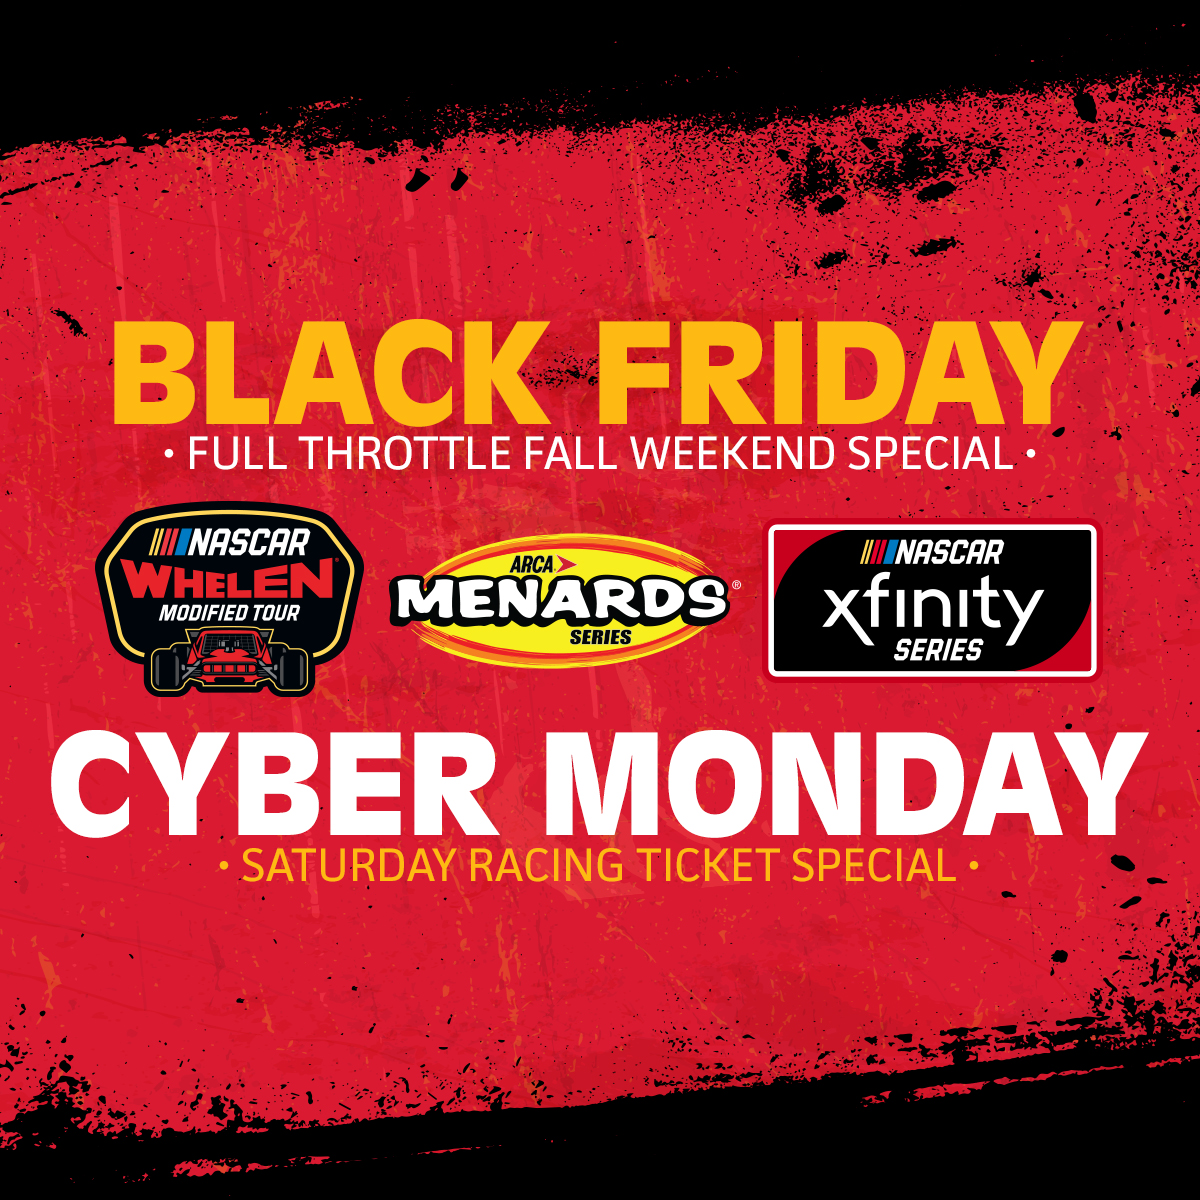 NFL Shop Black Friday Deals, NFL Cyber Monday Sales, 54% OFF